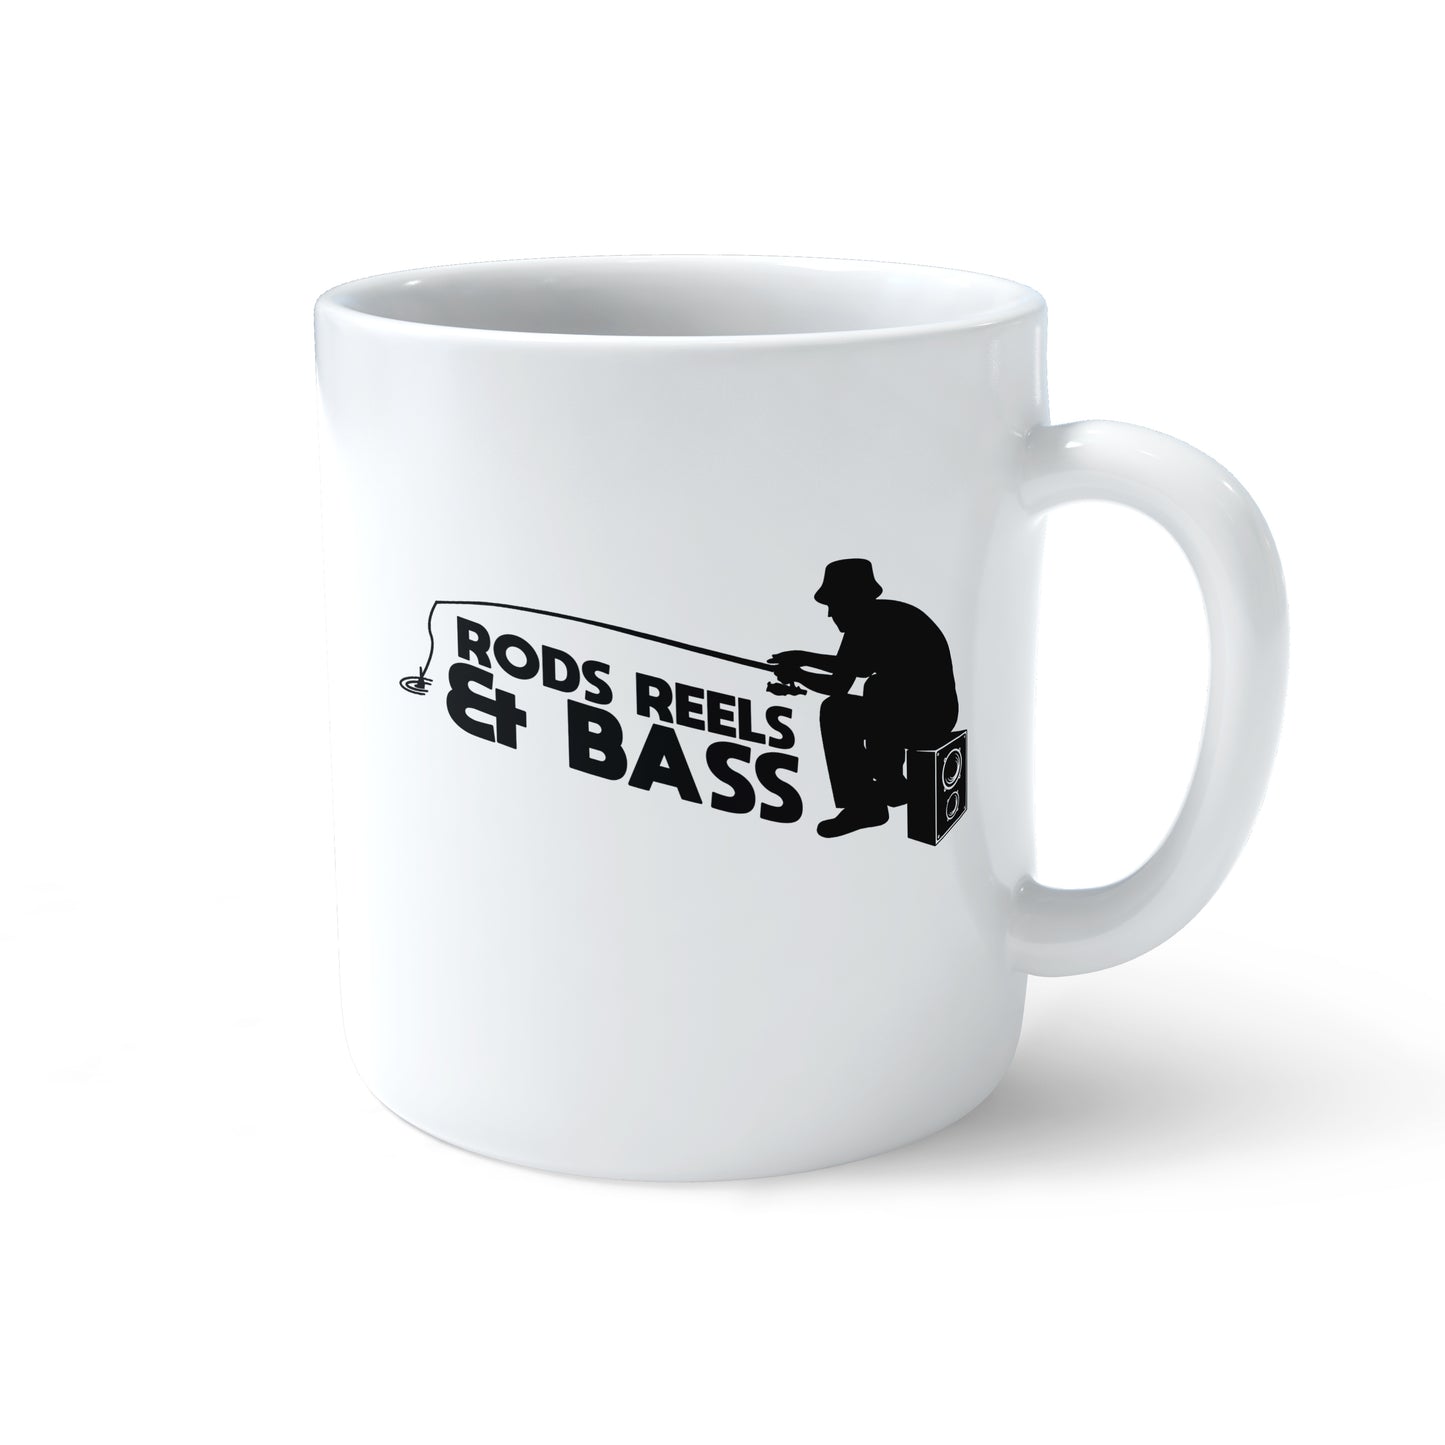 Rods Reels & Bass Mug